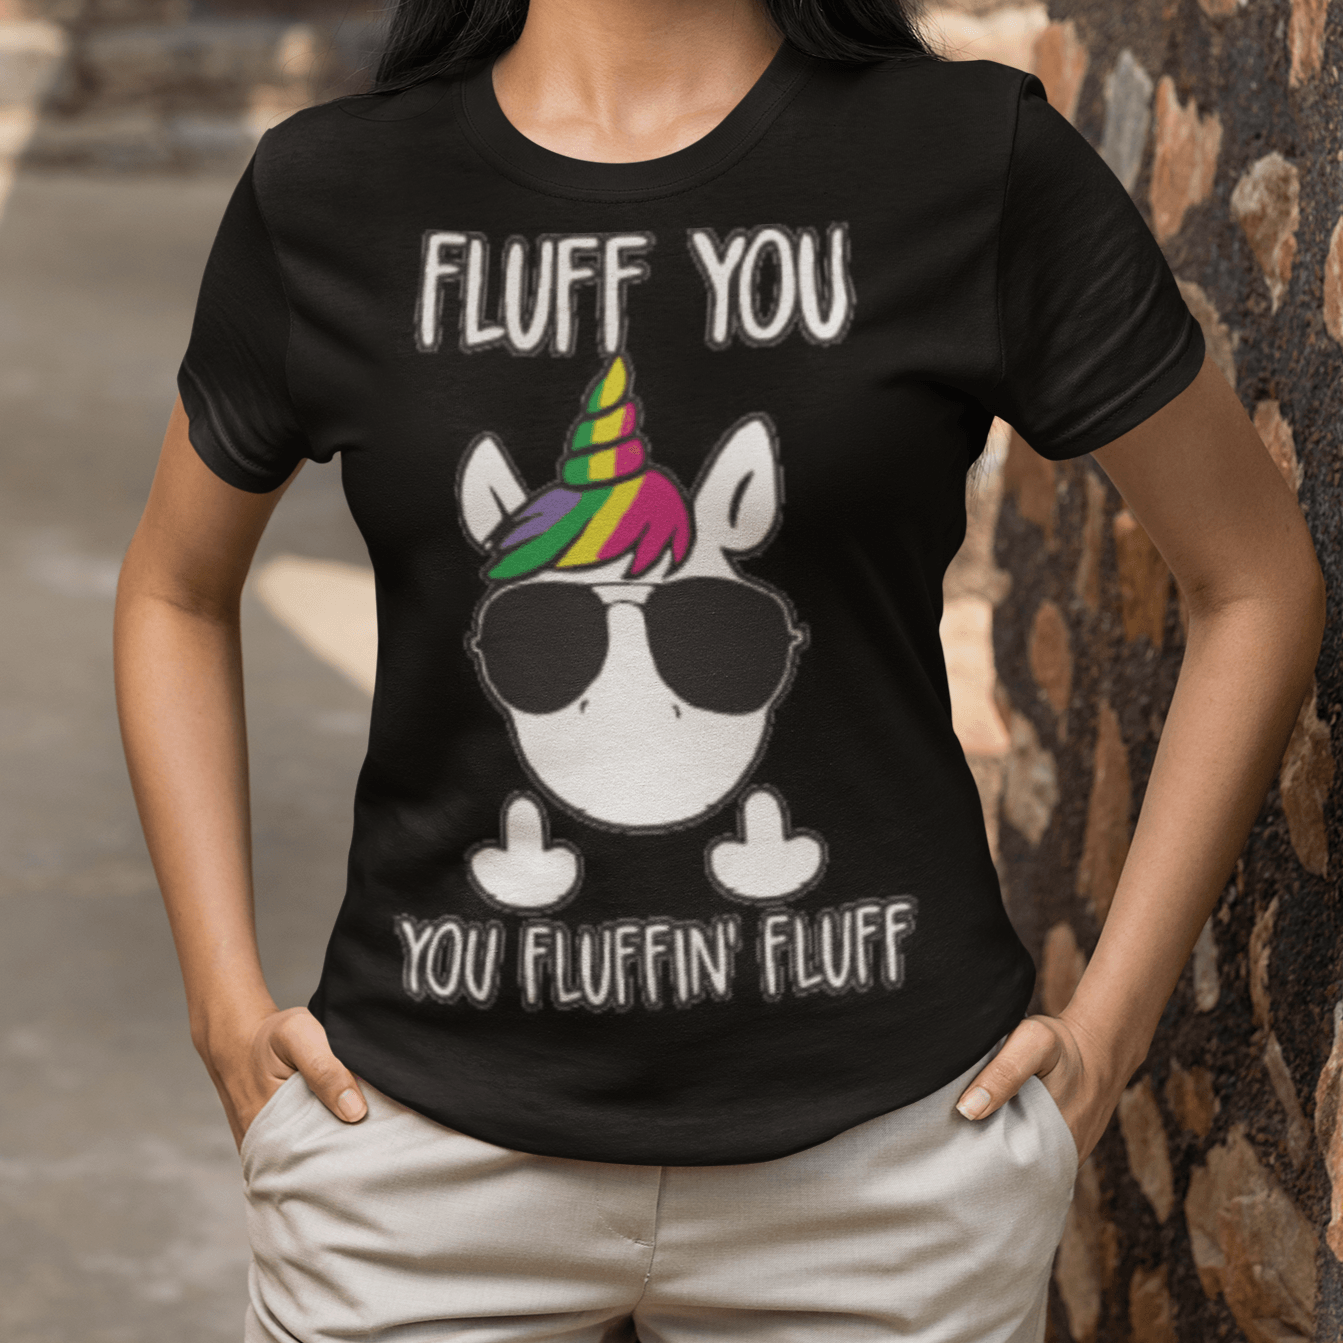 Unicorn T-shirt Fluff You, You Fluffin Fluff Sofstyle Top Koala Tee - TopKoalaTee